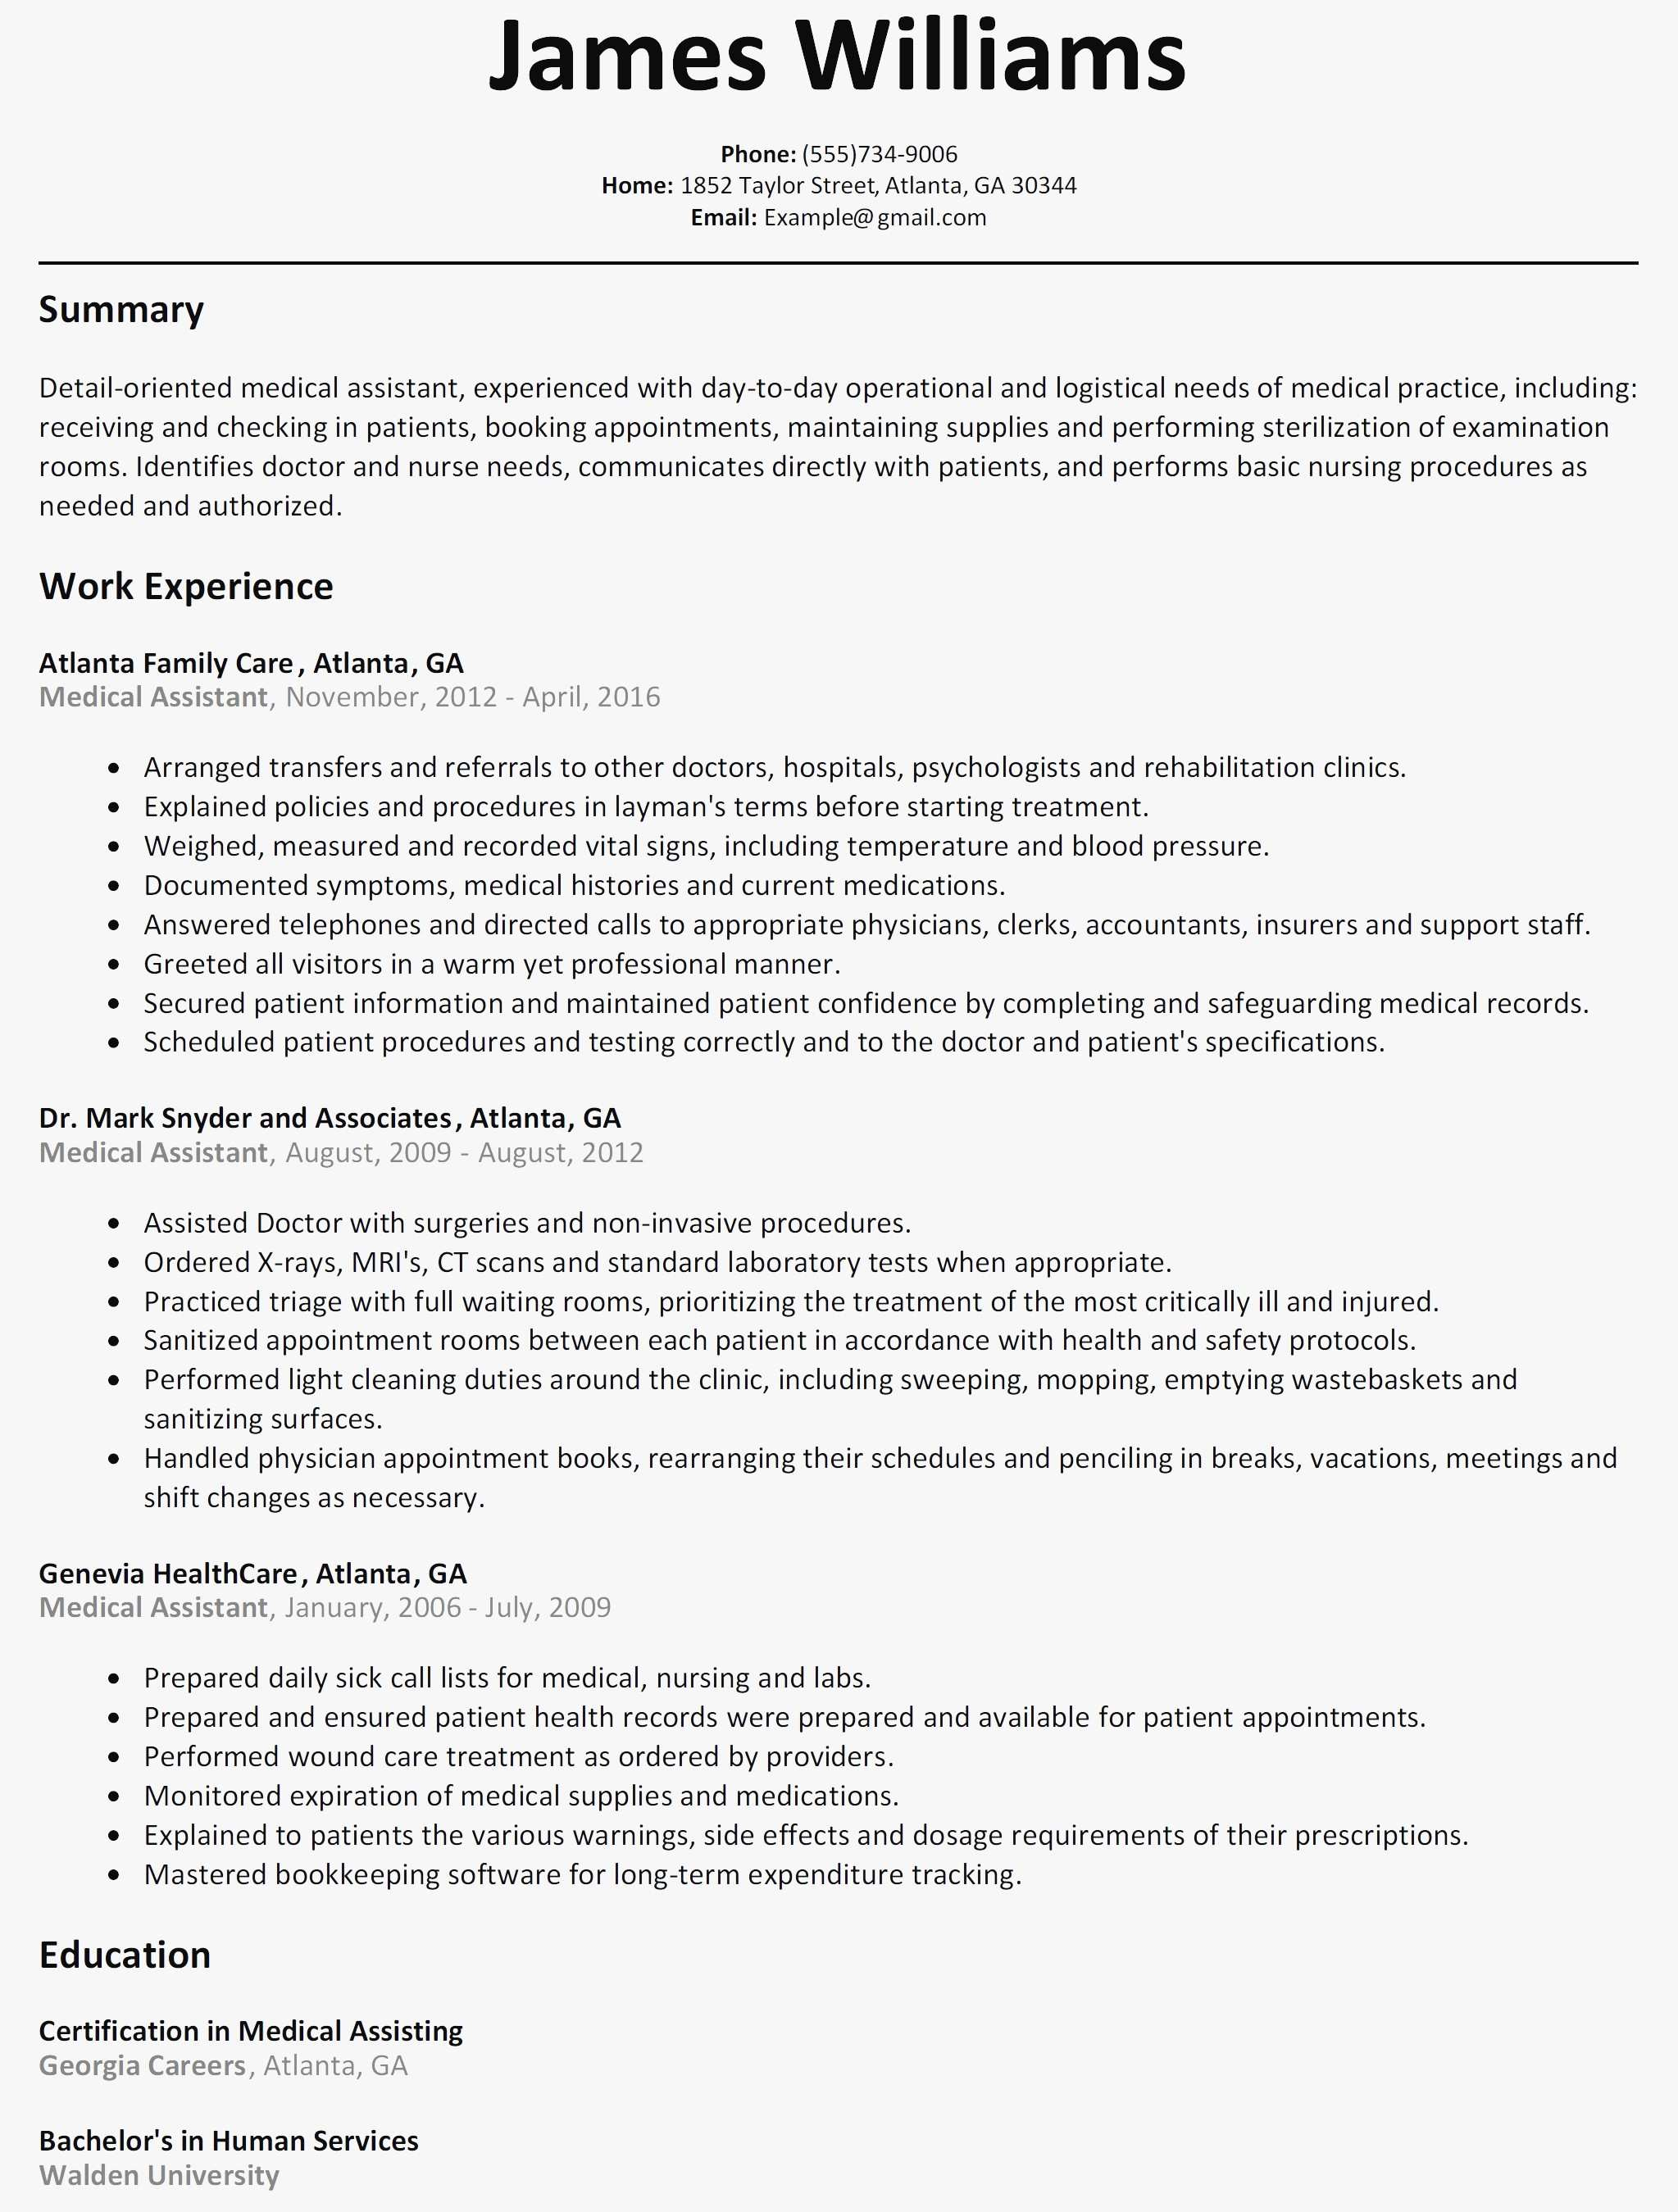 Resume Templates Microsoft Word Nursing Resume Template Microsoft Word resume templates microsoft word|wikiresume.com